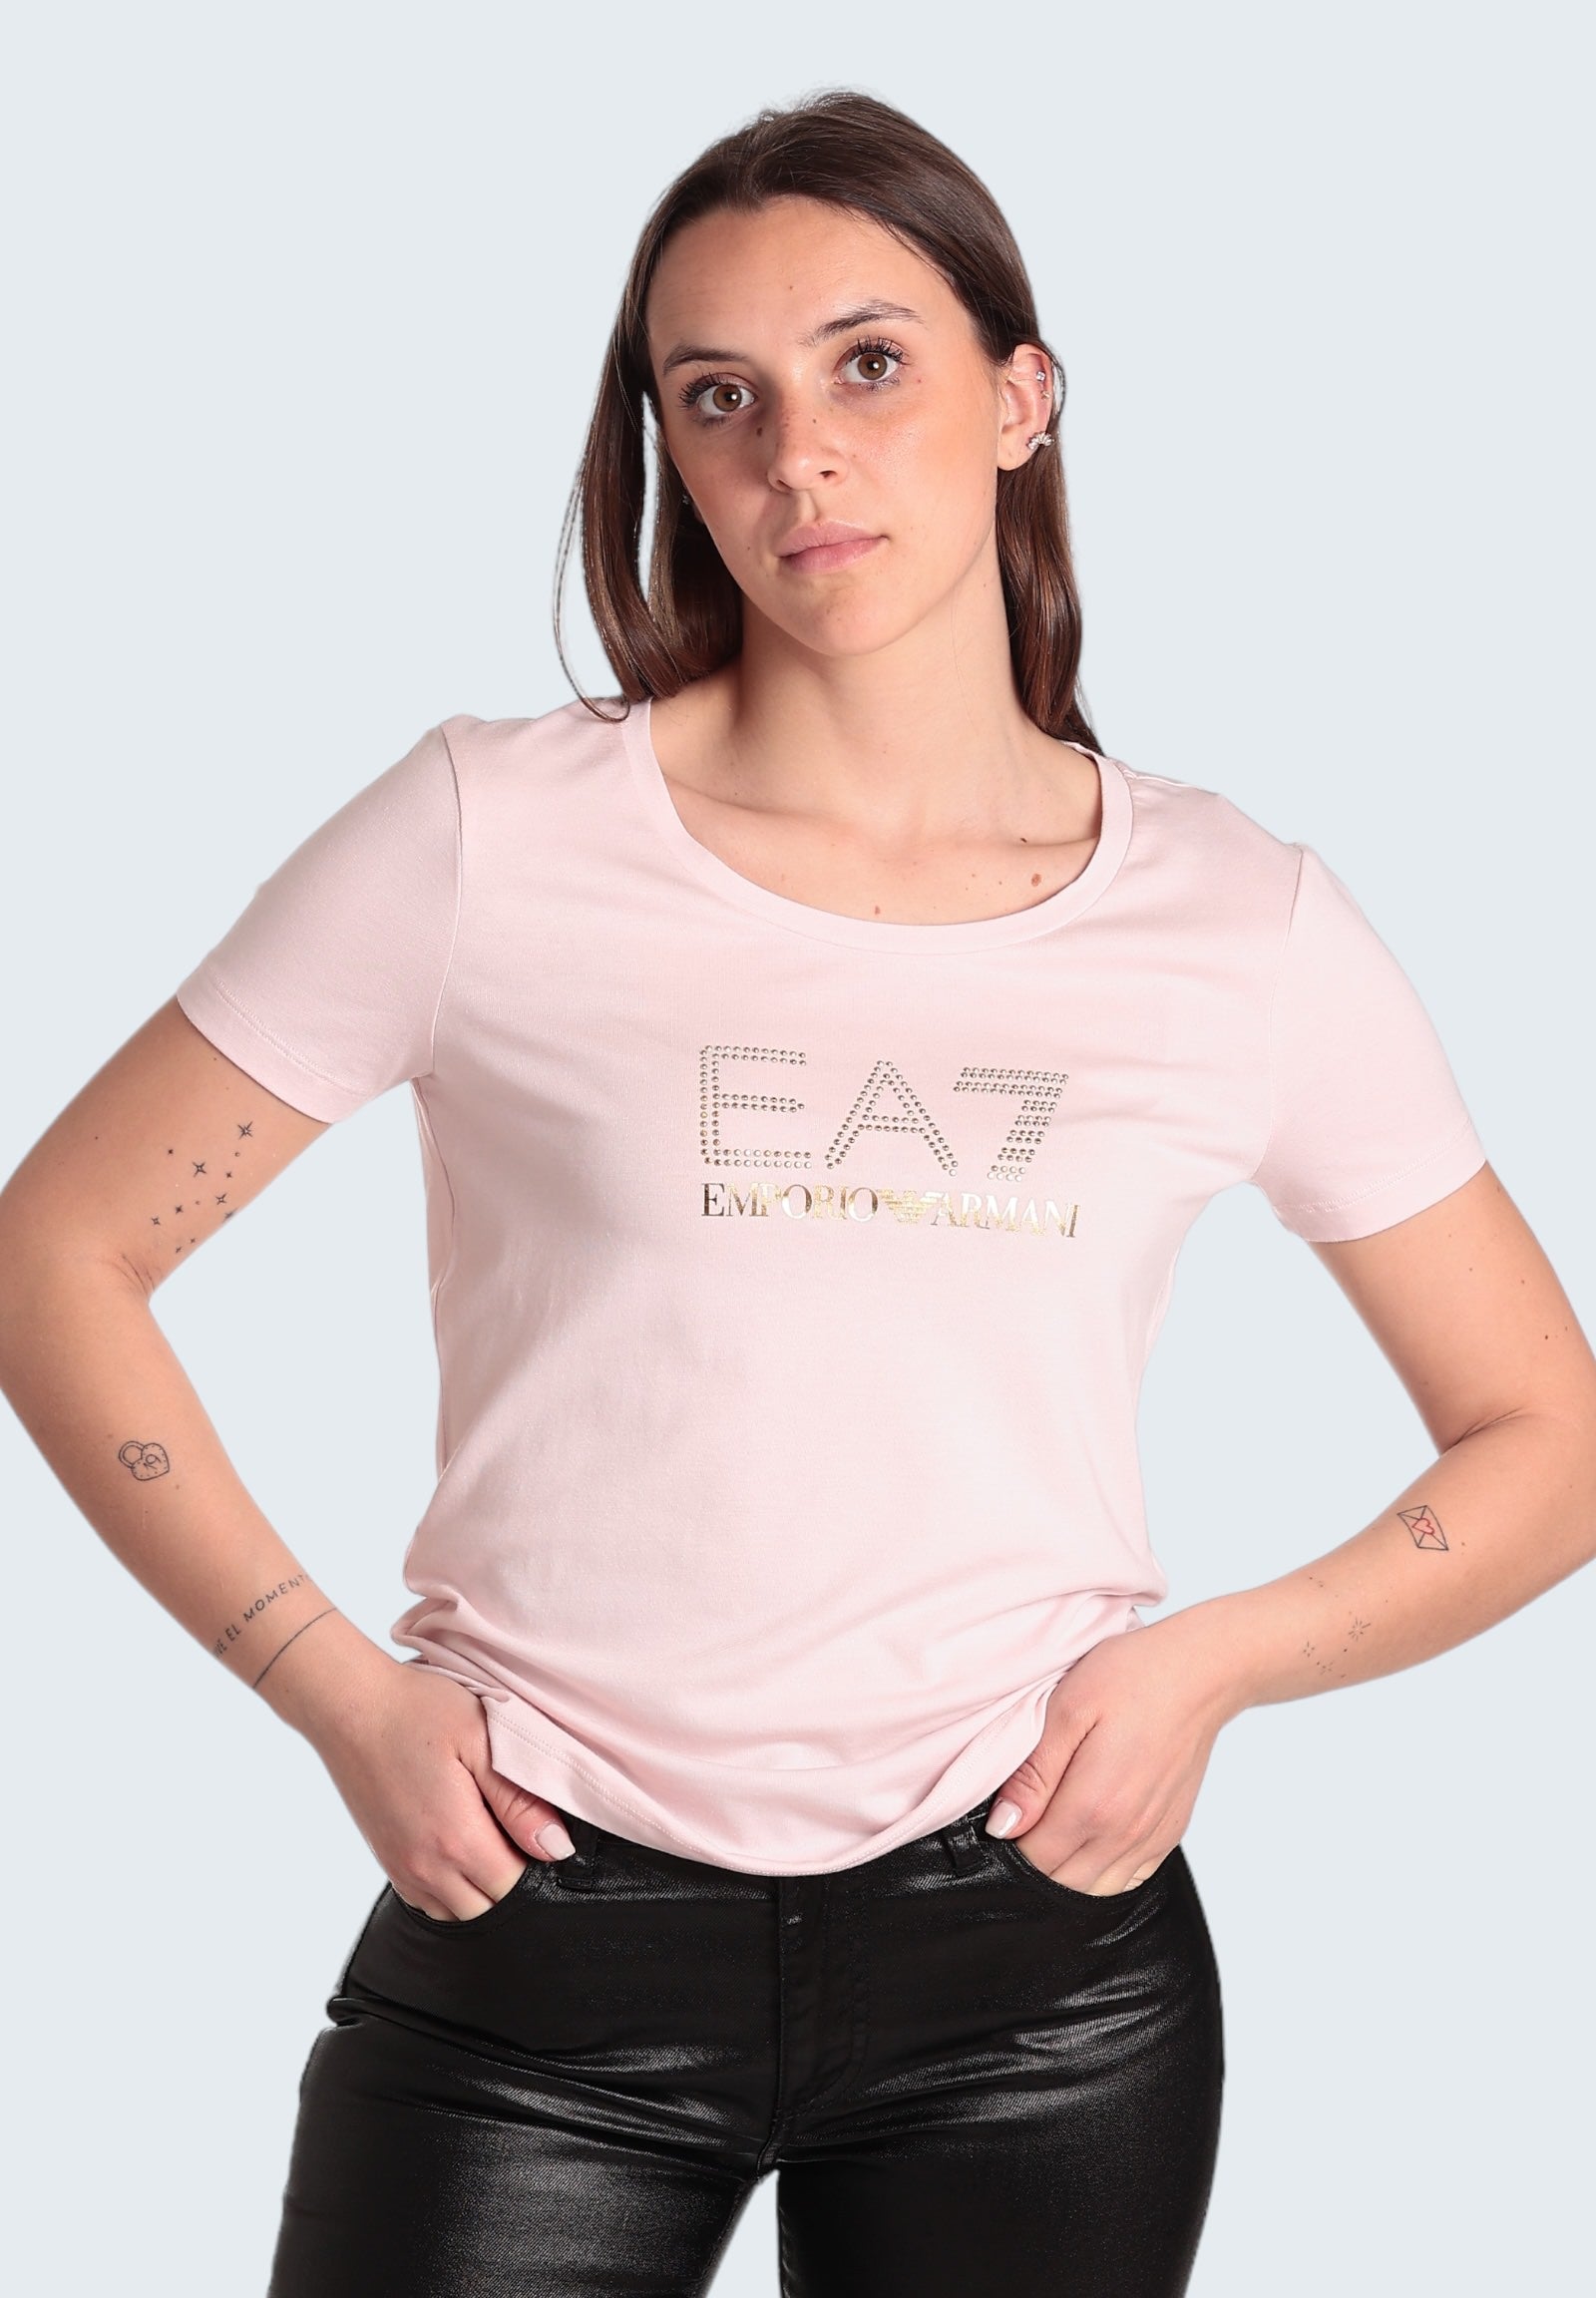 Ea7 Emporio Armani T-Shirt 8ntt67 Mauve Chalk